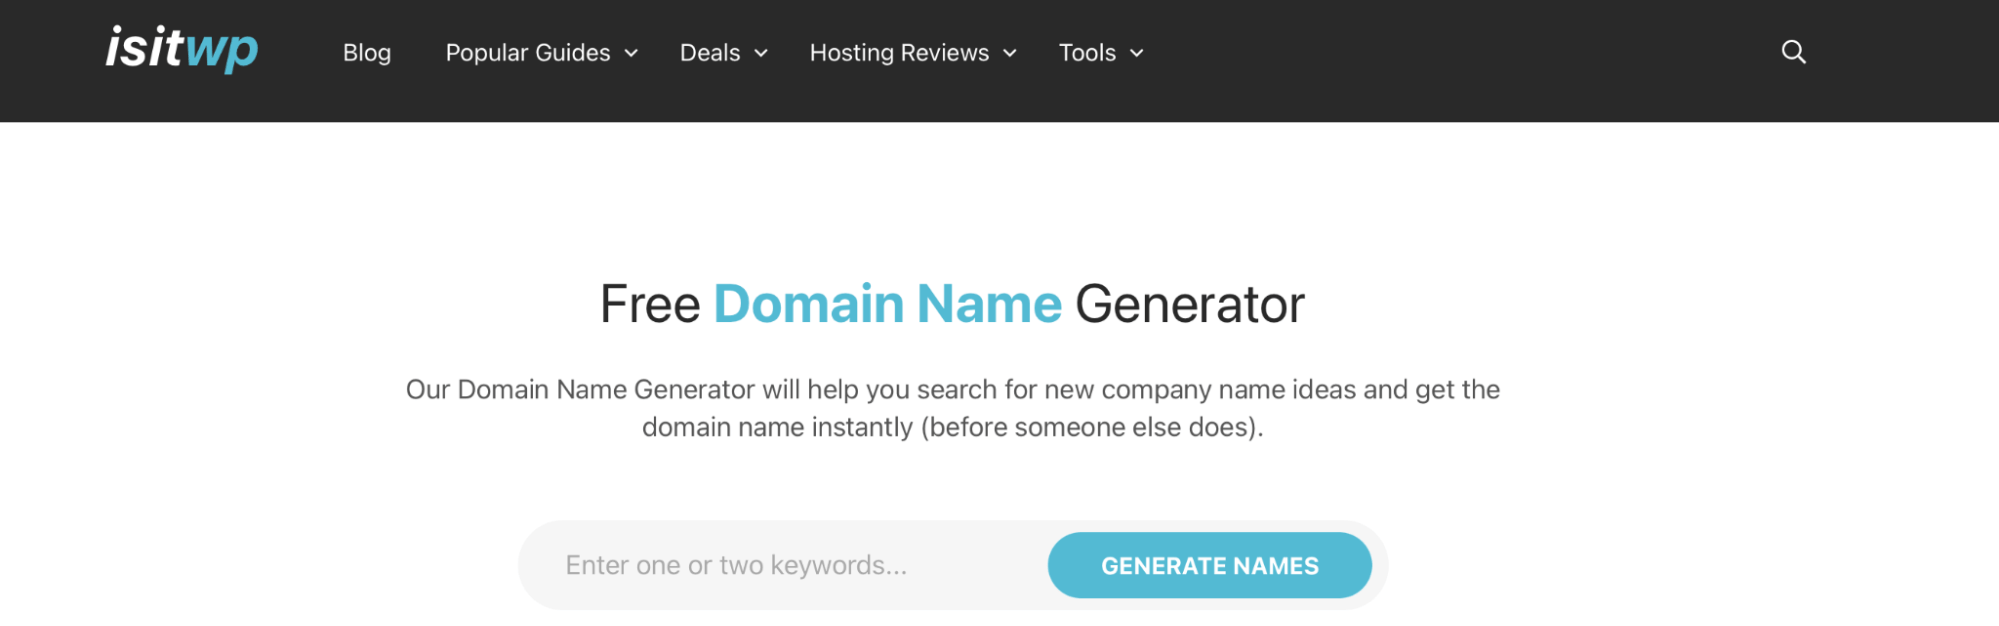 IsItWP free domain name generator